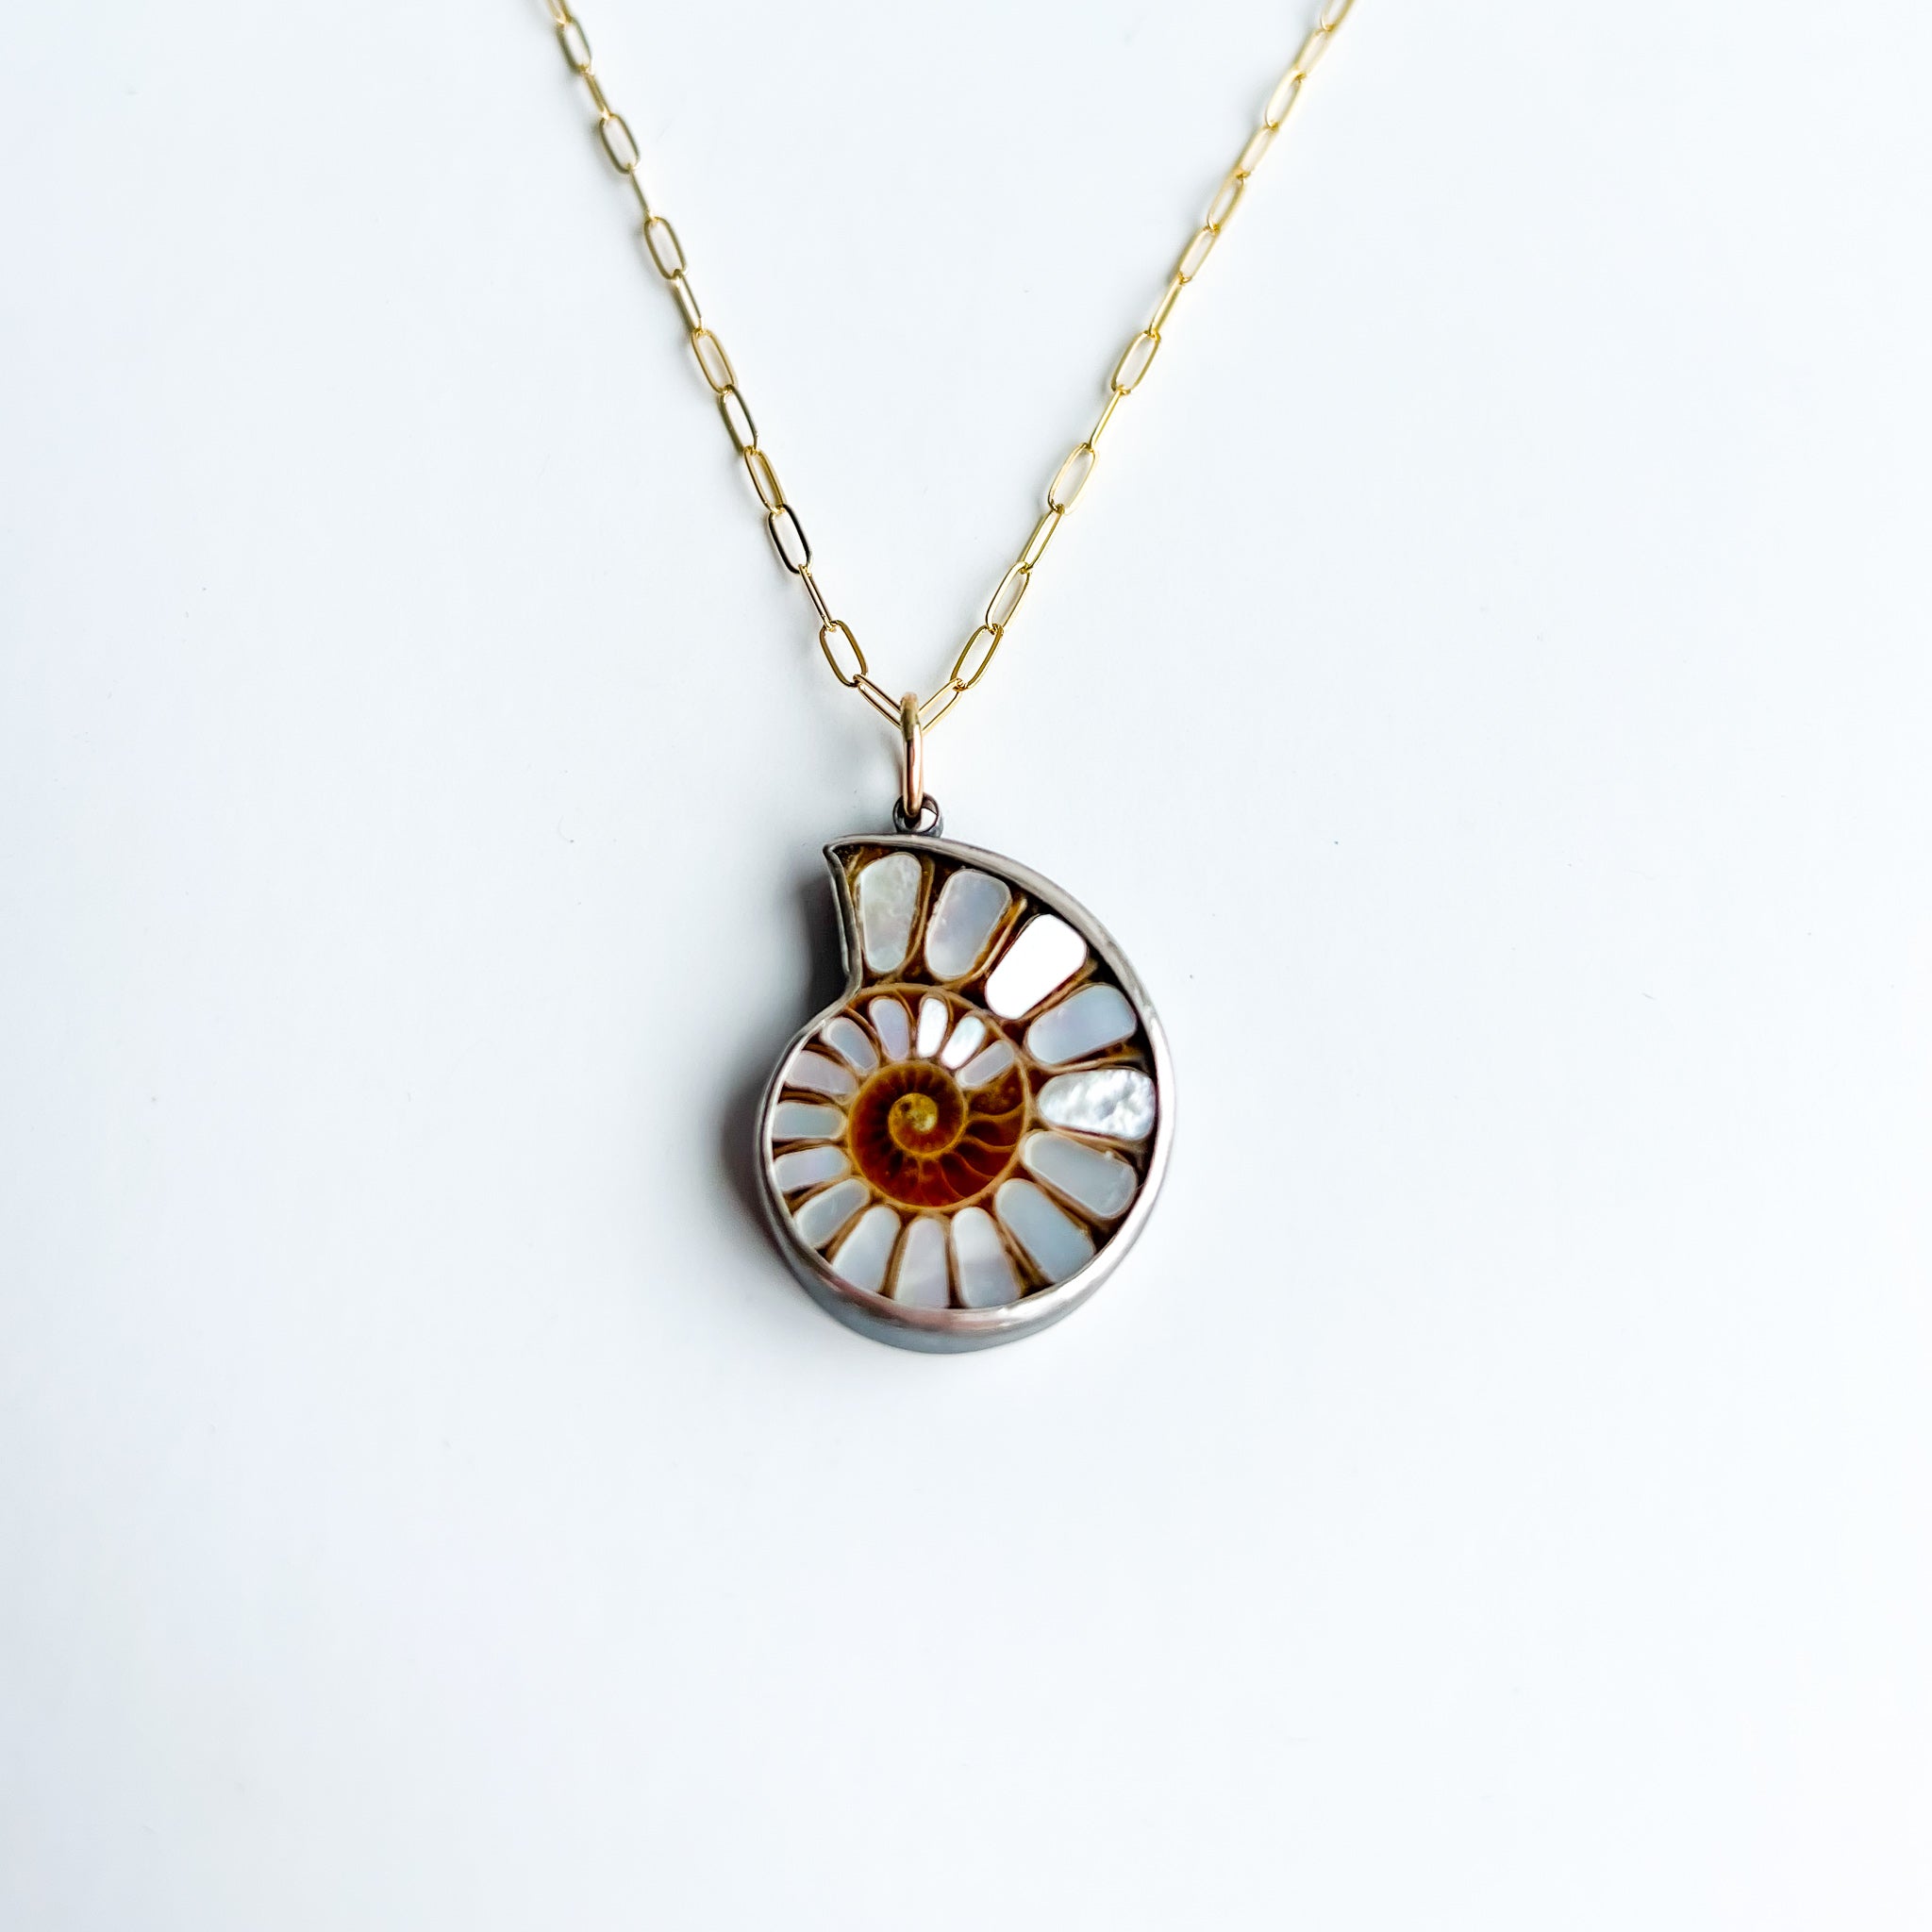 OOAK - Ammonite Necklace . 1